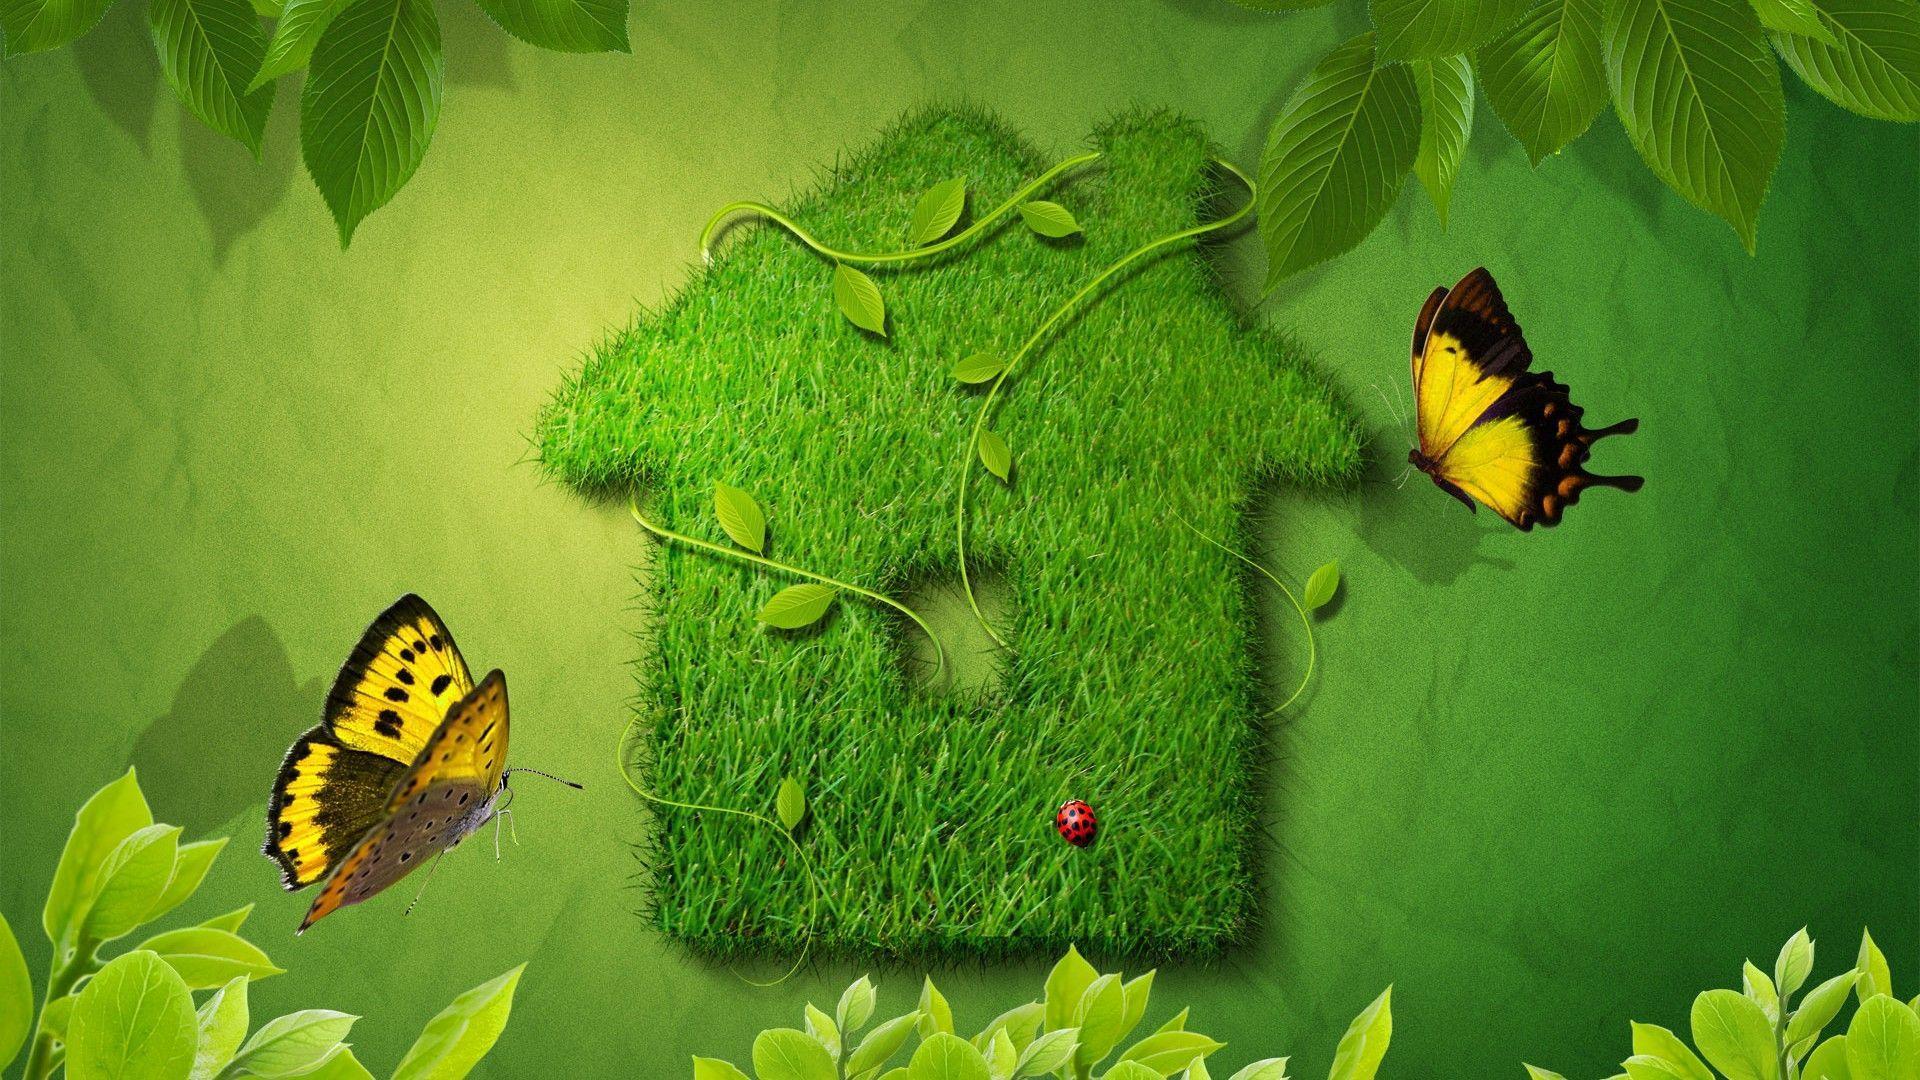 Green Home Turf 3D Wallpaper Natural Image HD Free Download